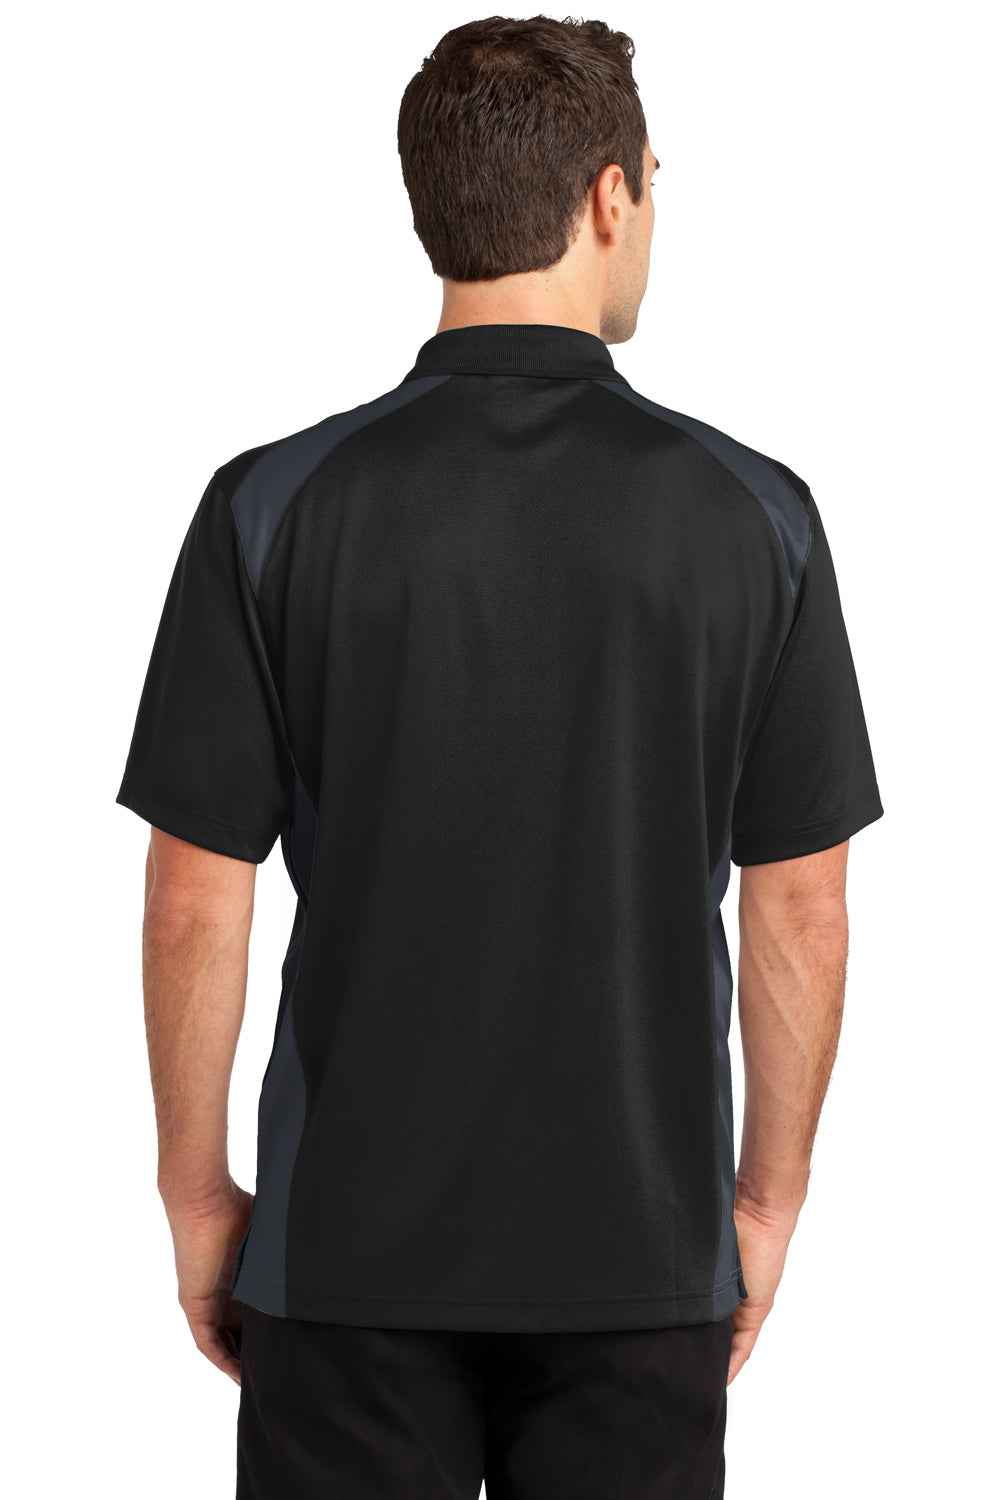 CornerStone CS416 Mens Select Moisture Wicking Short Sleeve Polo Shirt w/ Pocket Black/Charcoal Grey Back